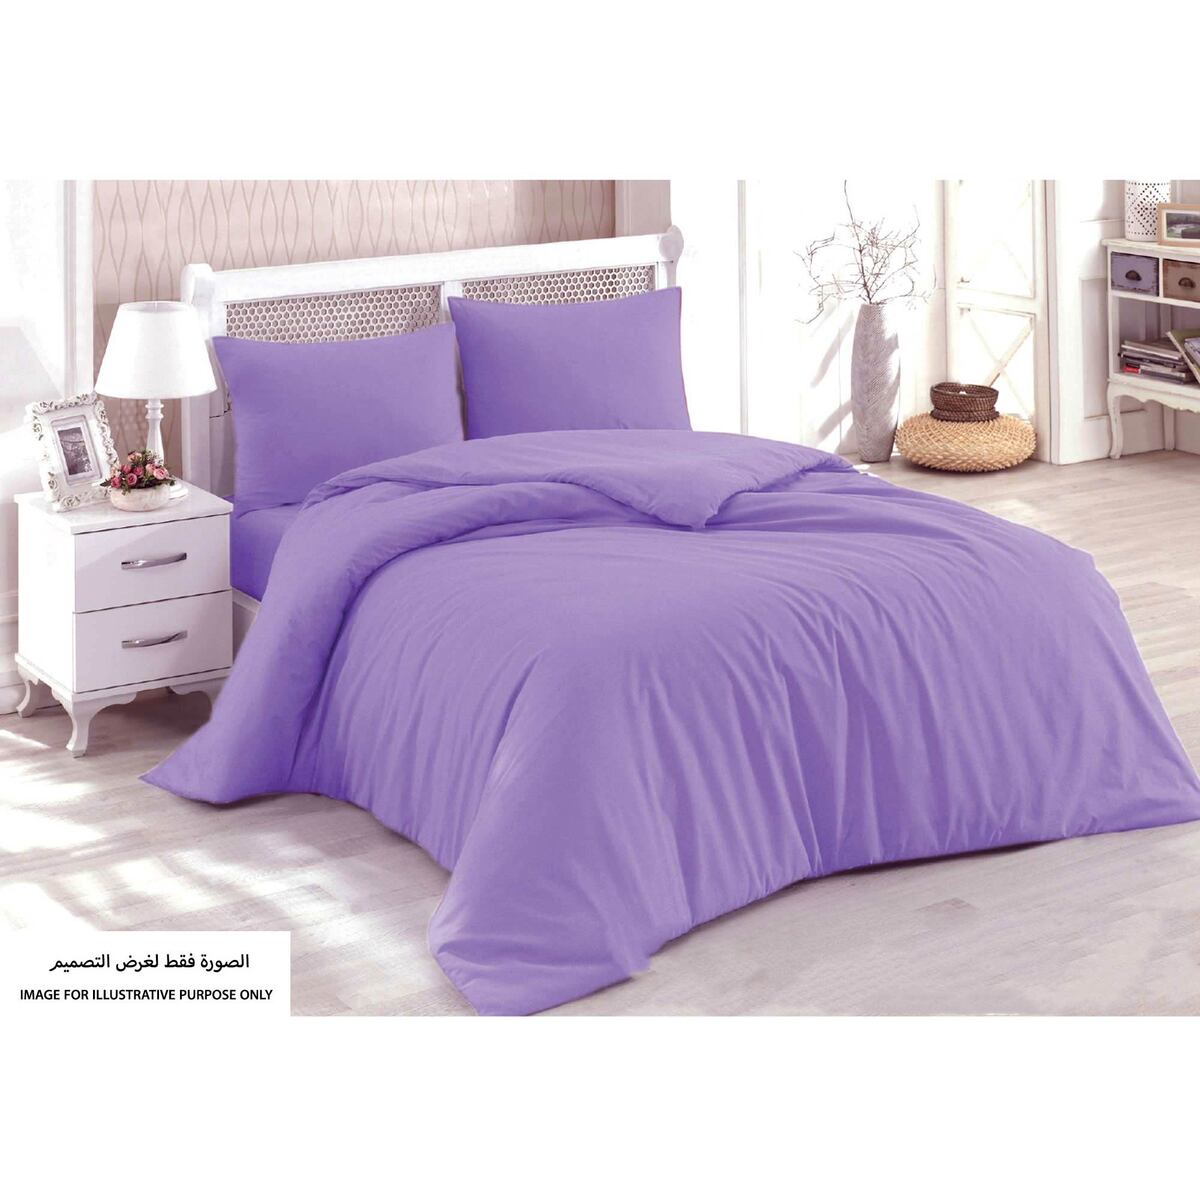 Homewell Single Comforter 3pc Set Lilac